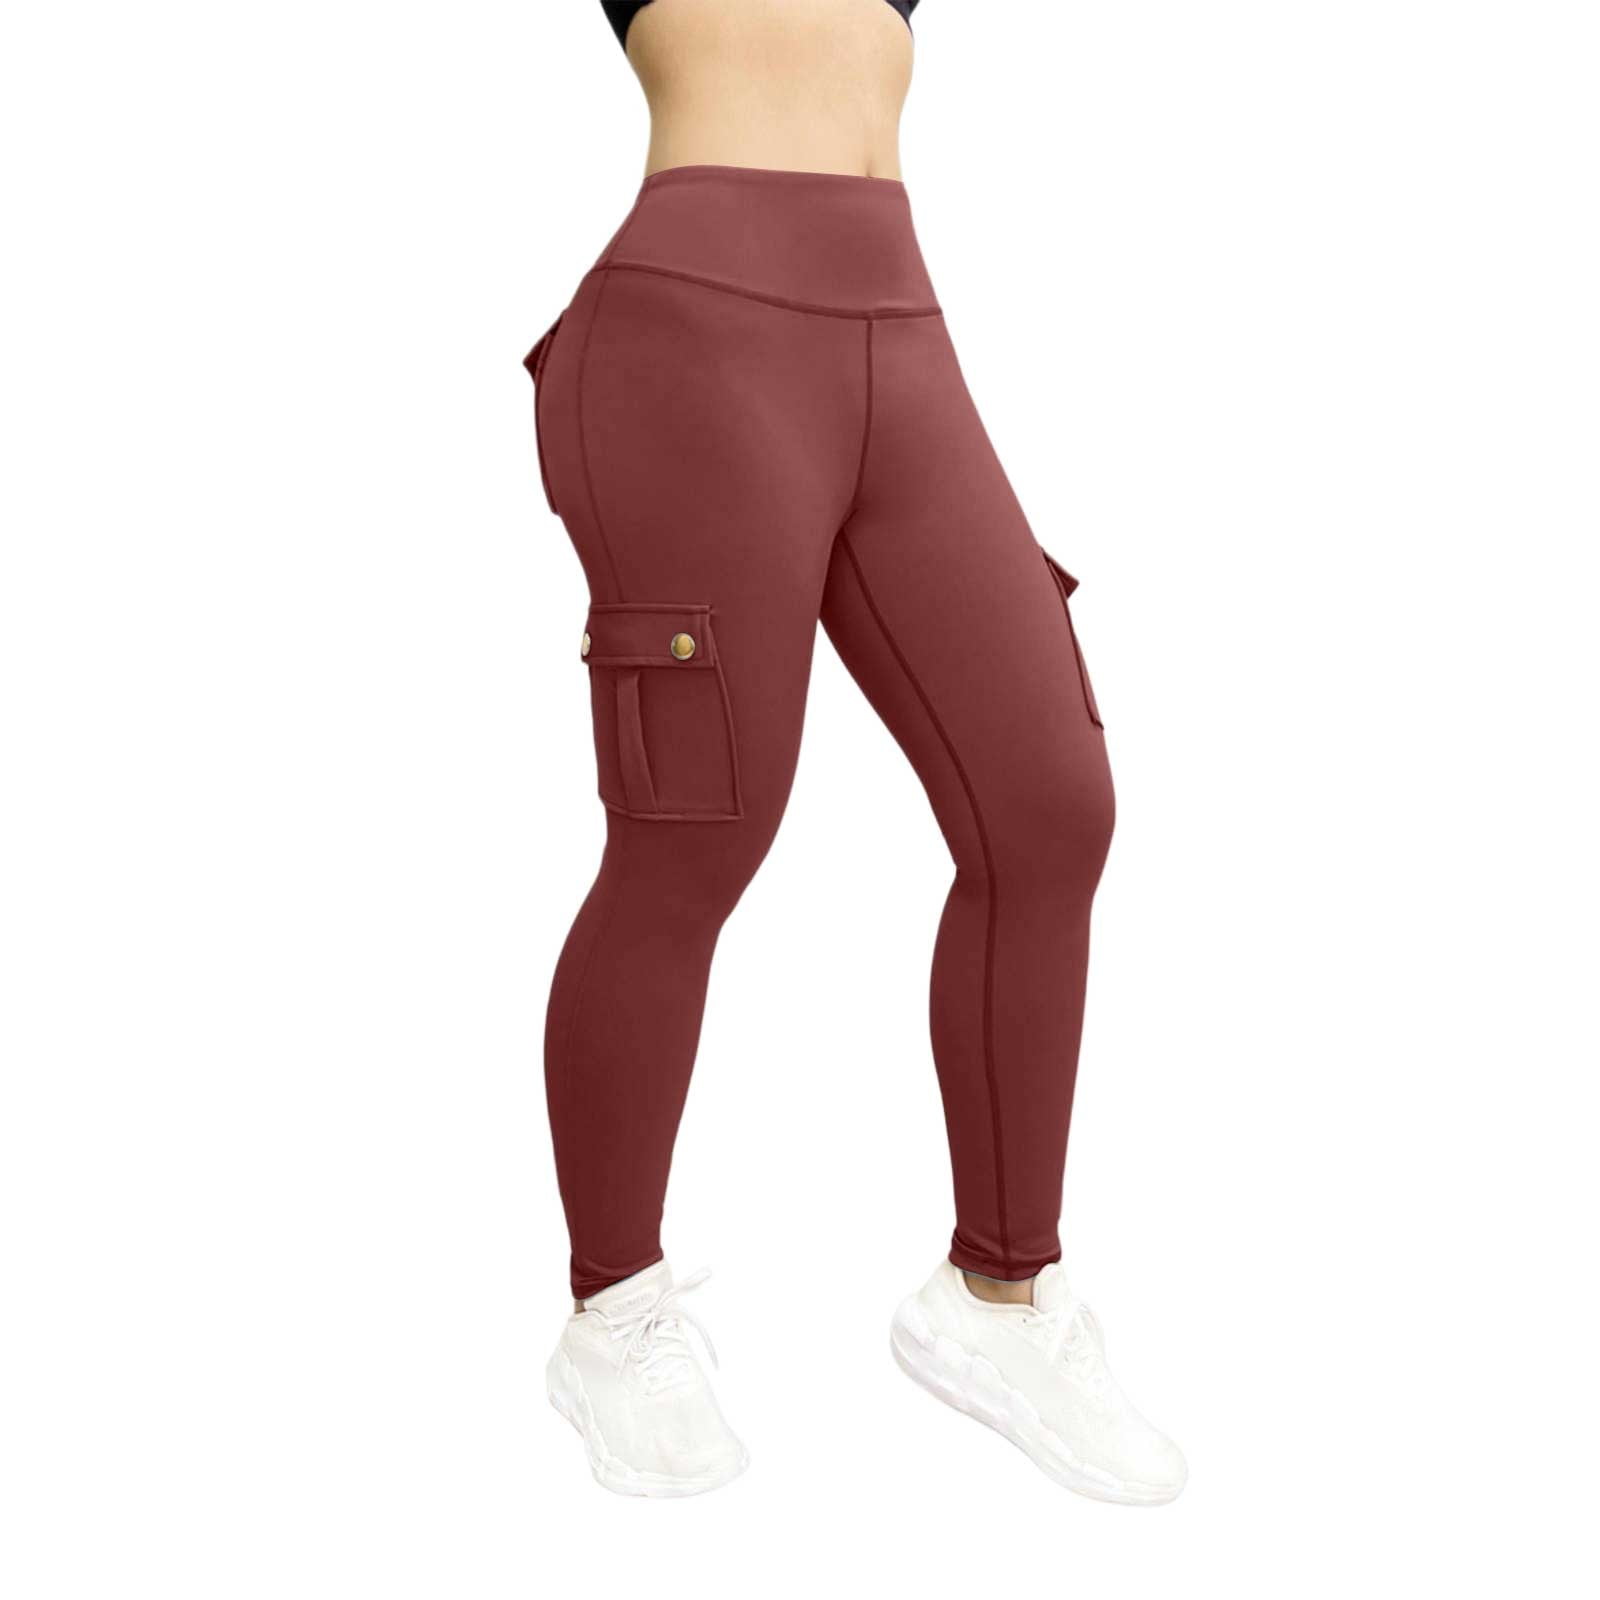 Vestitiy Yoga Pants Workwear Fitness Pants Women's High Elastic Tight ...